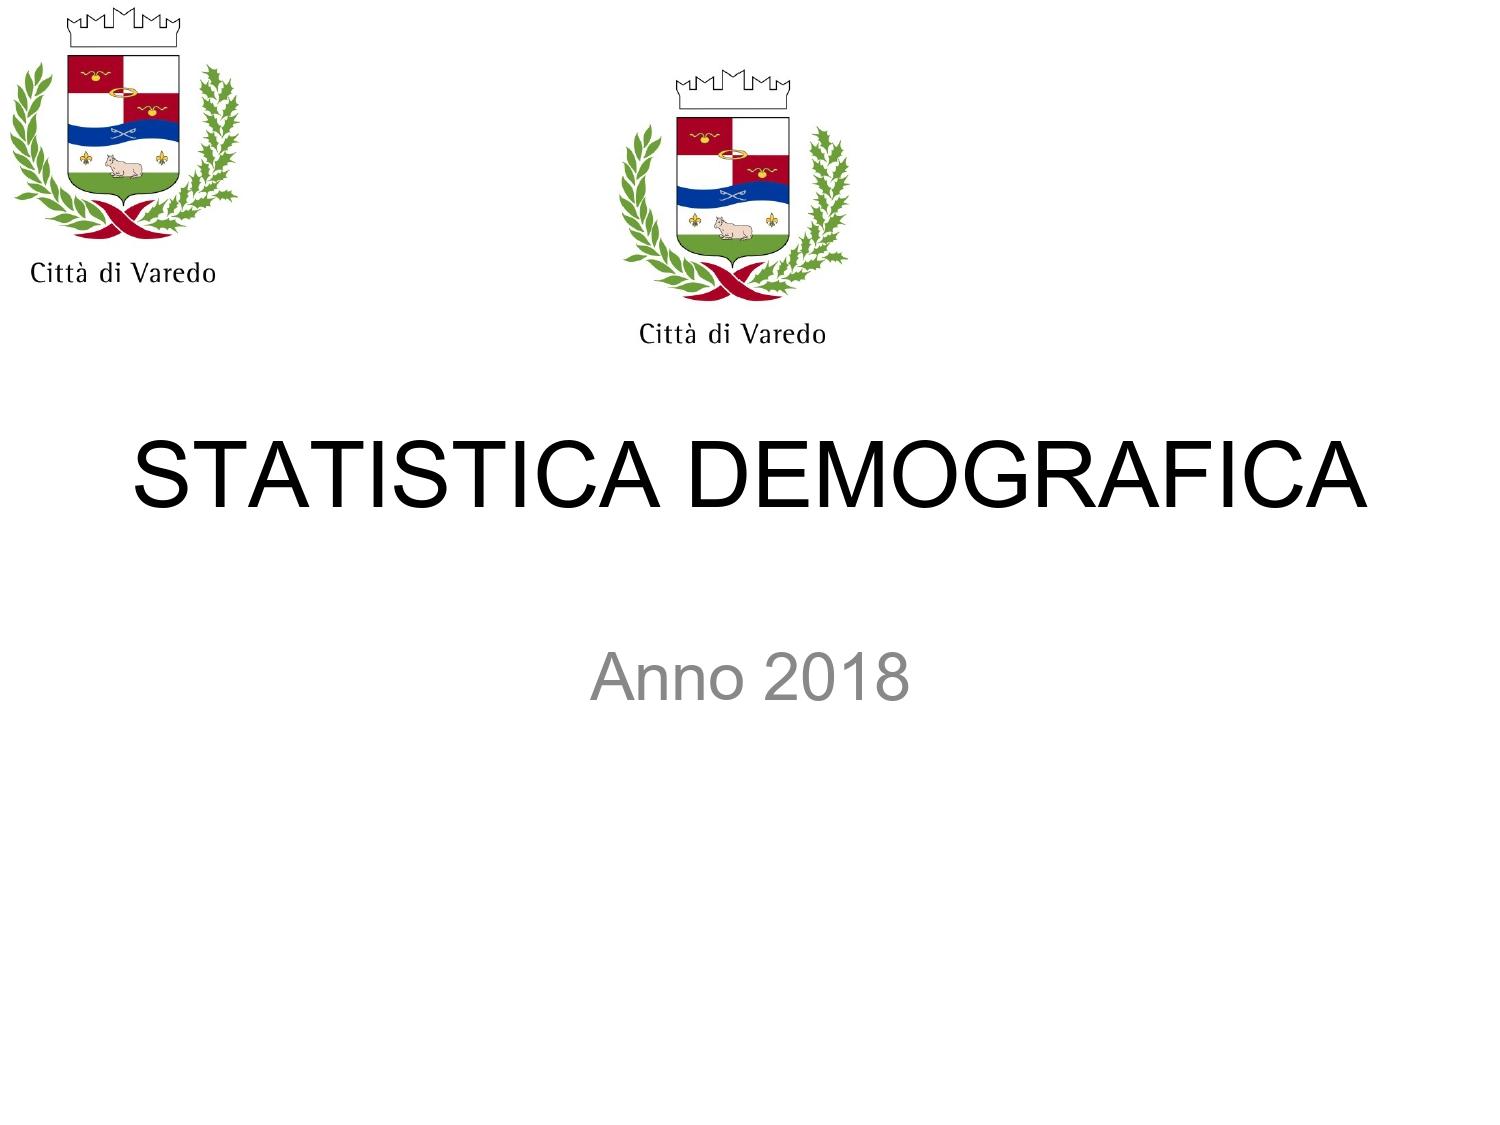 Statistica Demografica 2018